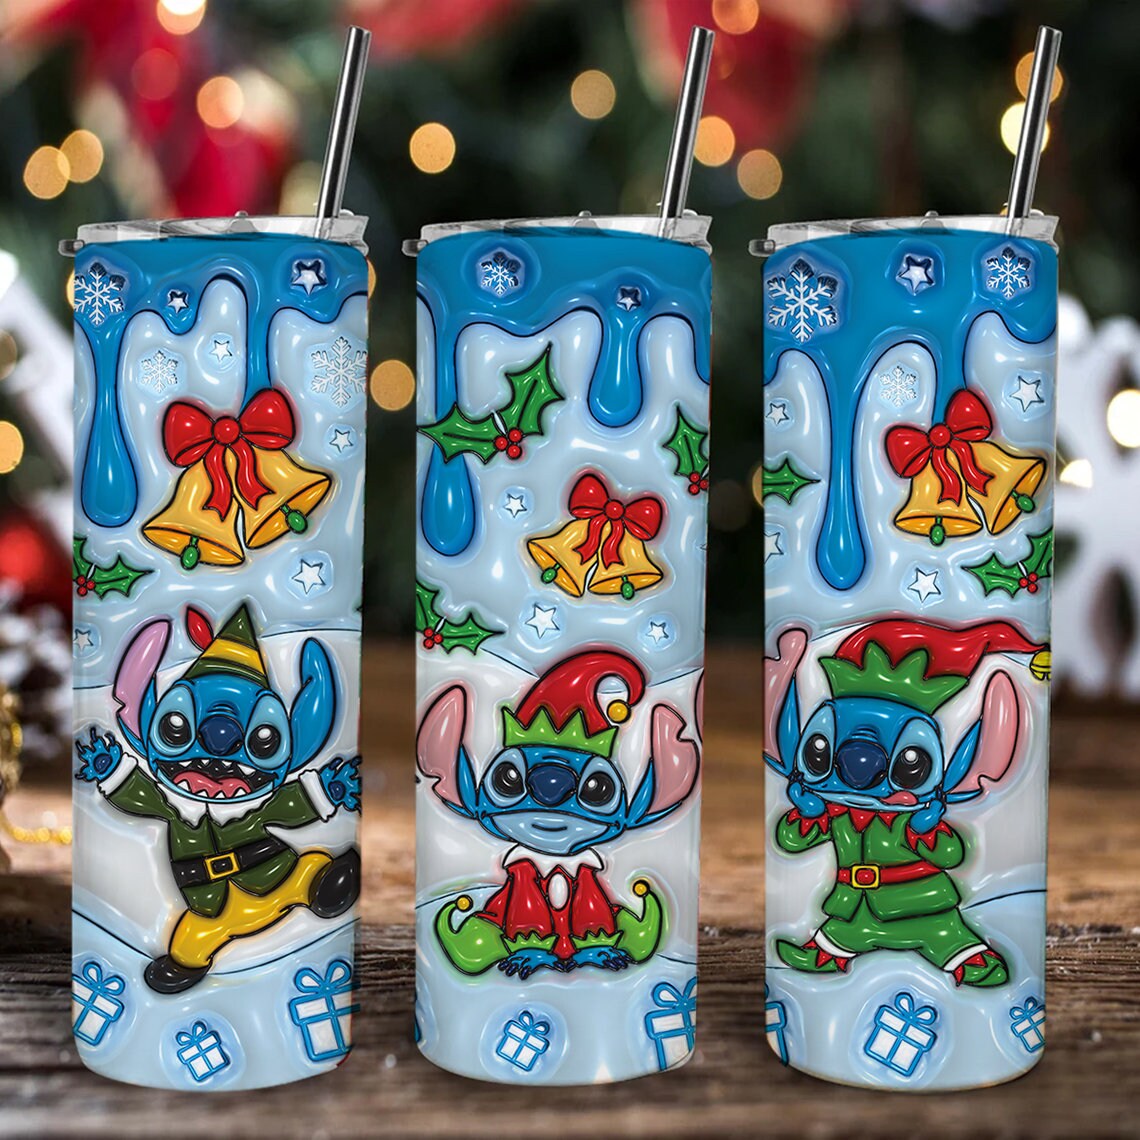 3D Inflated Cartoon Christmas Tumbler Wrap, Tis The Season Design Download PNG, 20 Oz Digital Tumbler Wrap, Merry Christmas, Xmas Vibes - VartDigitals